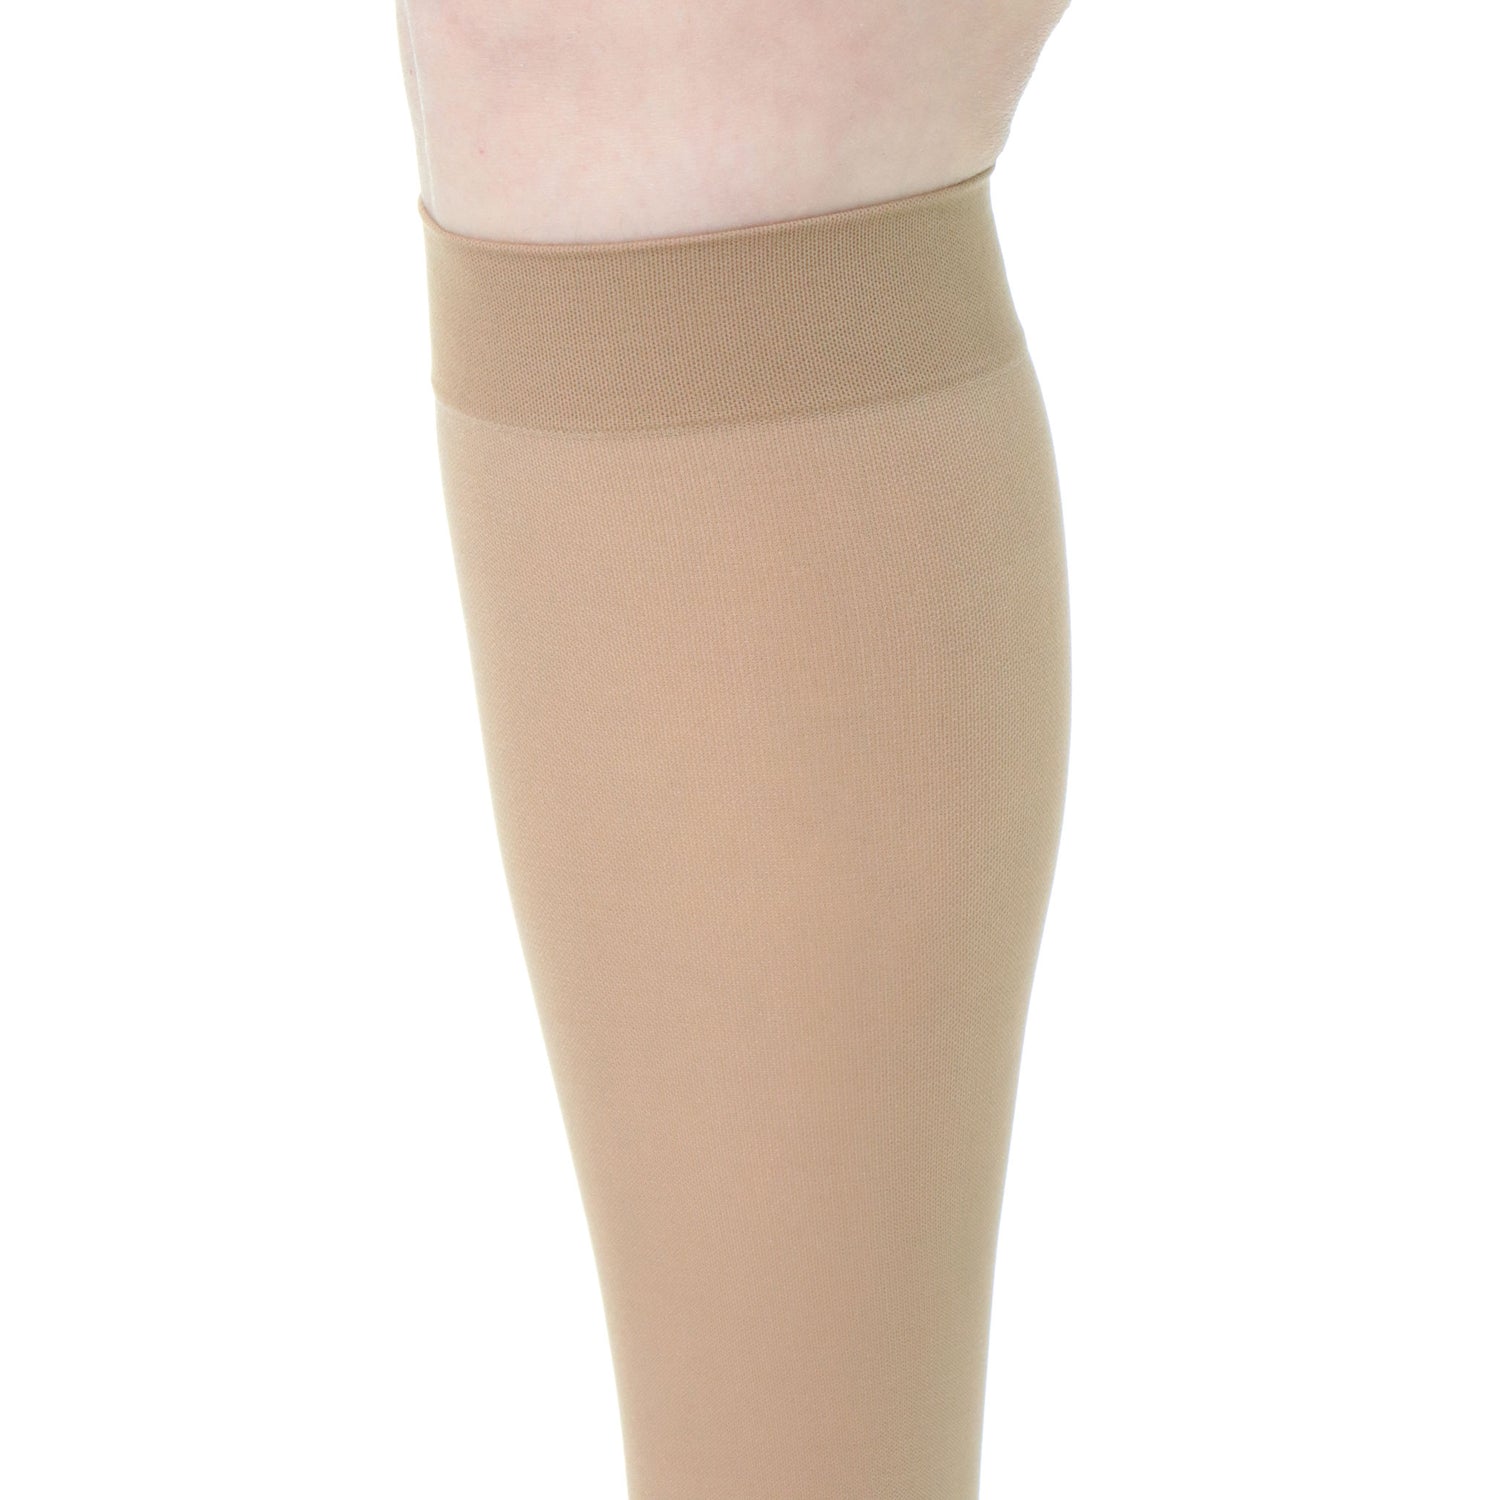 Compression Socks For Women  Knee High - 20 30 mmHg - Closed Toe